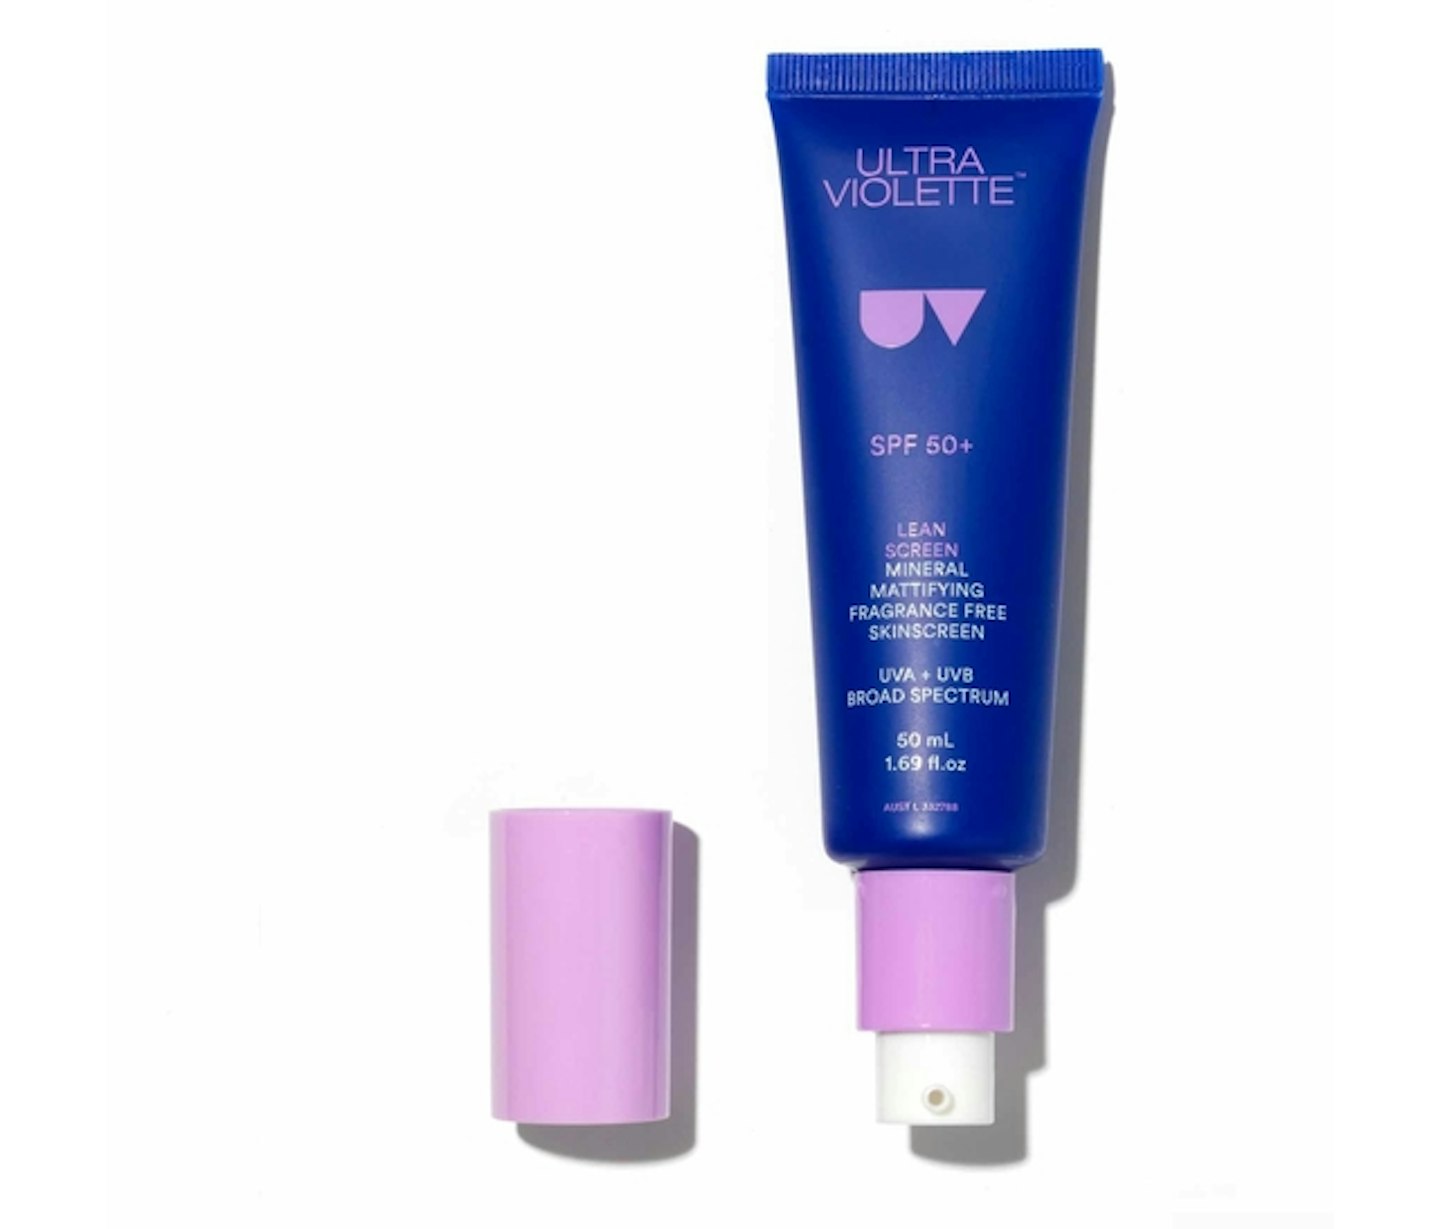 Ultra Violette mineral sunscreen